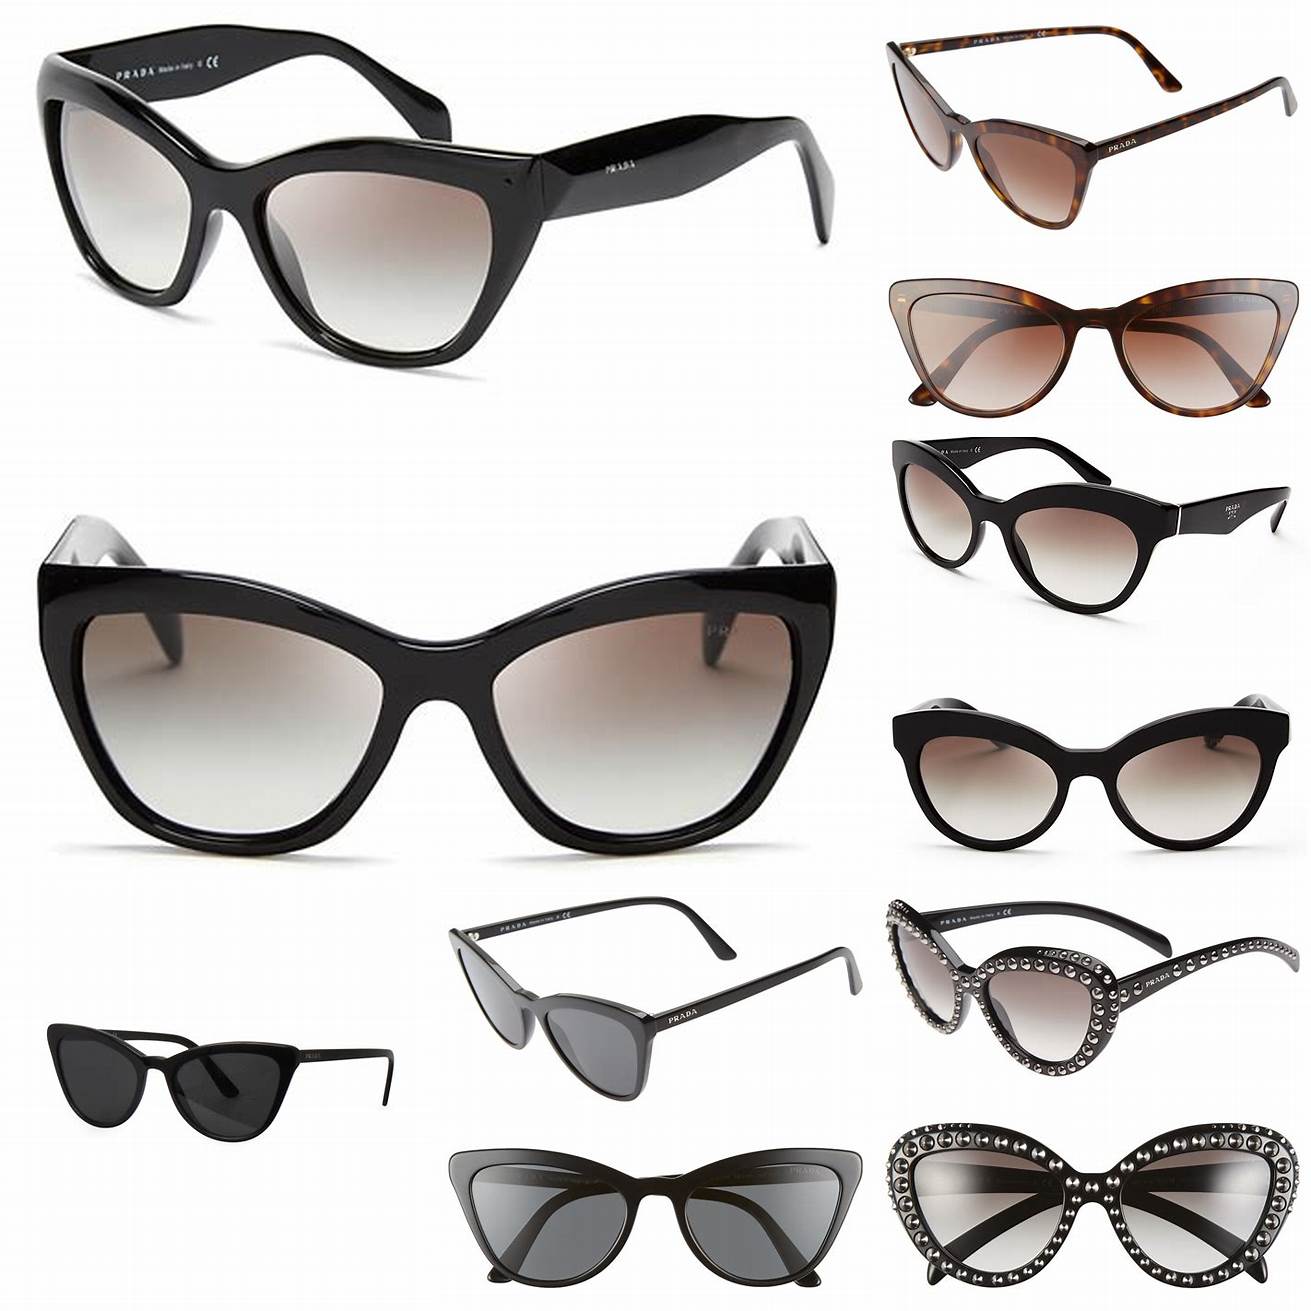 Q Can I wear cat eye Prada sunglasses with prescription lenses